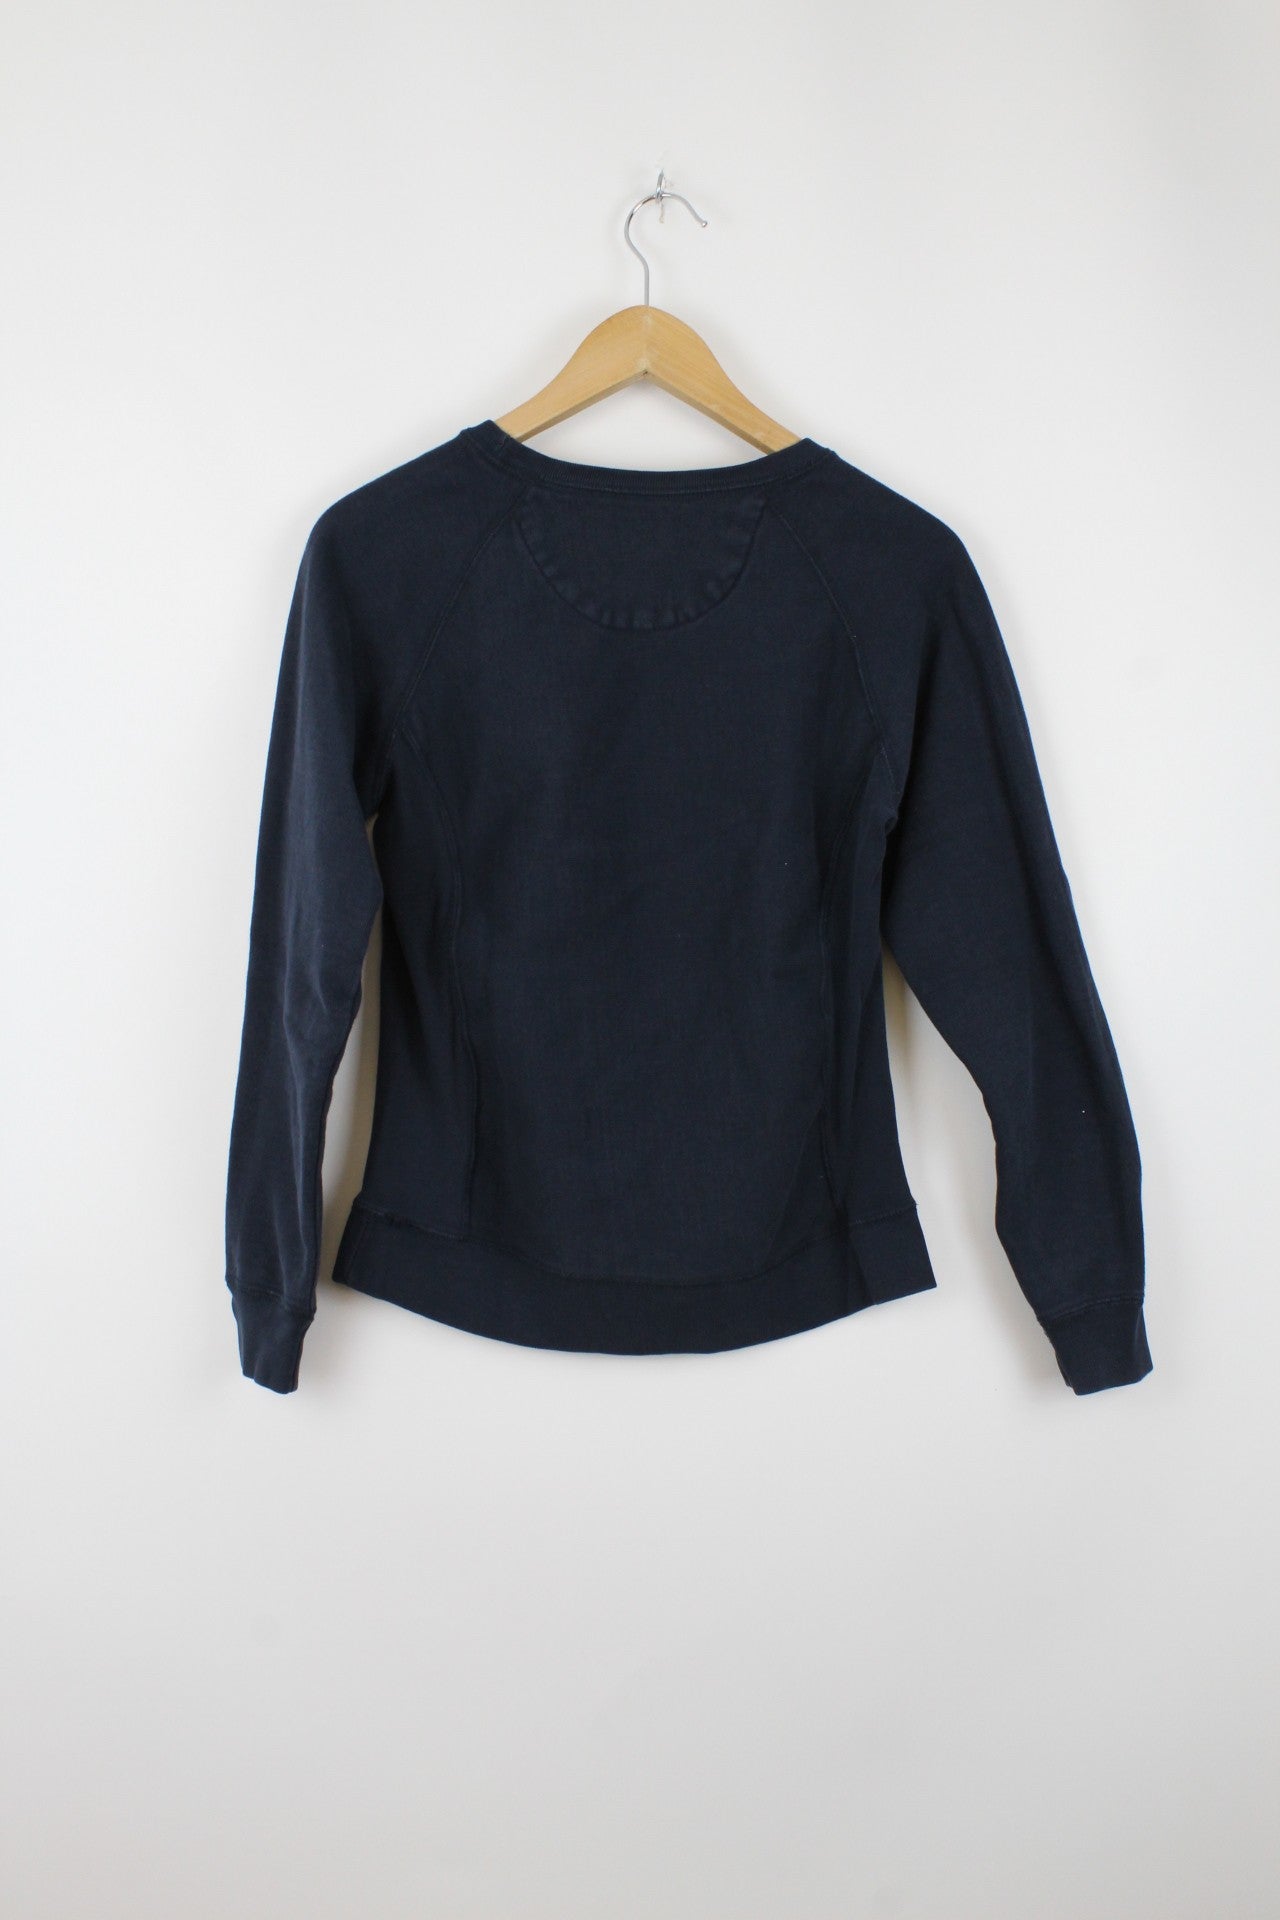 Vintage Champion Sweater - XS